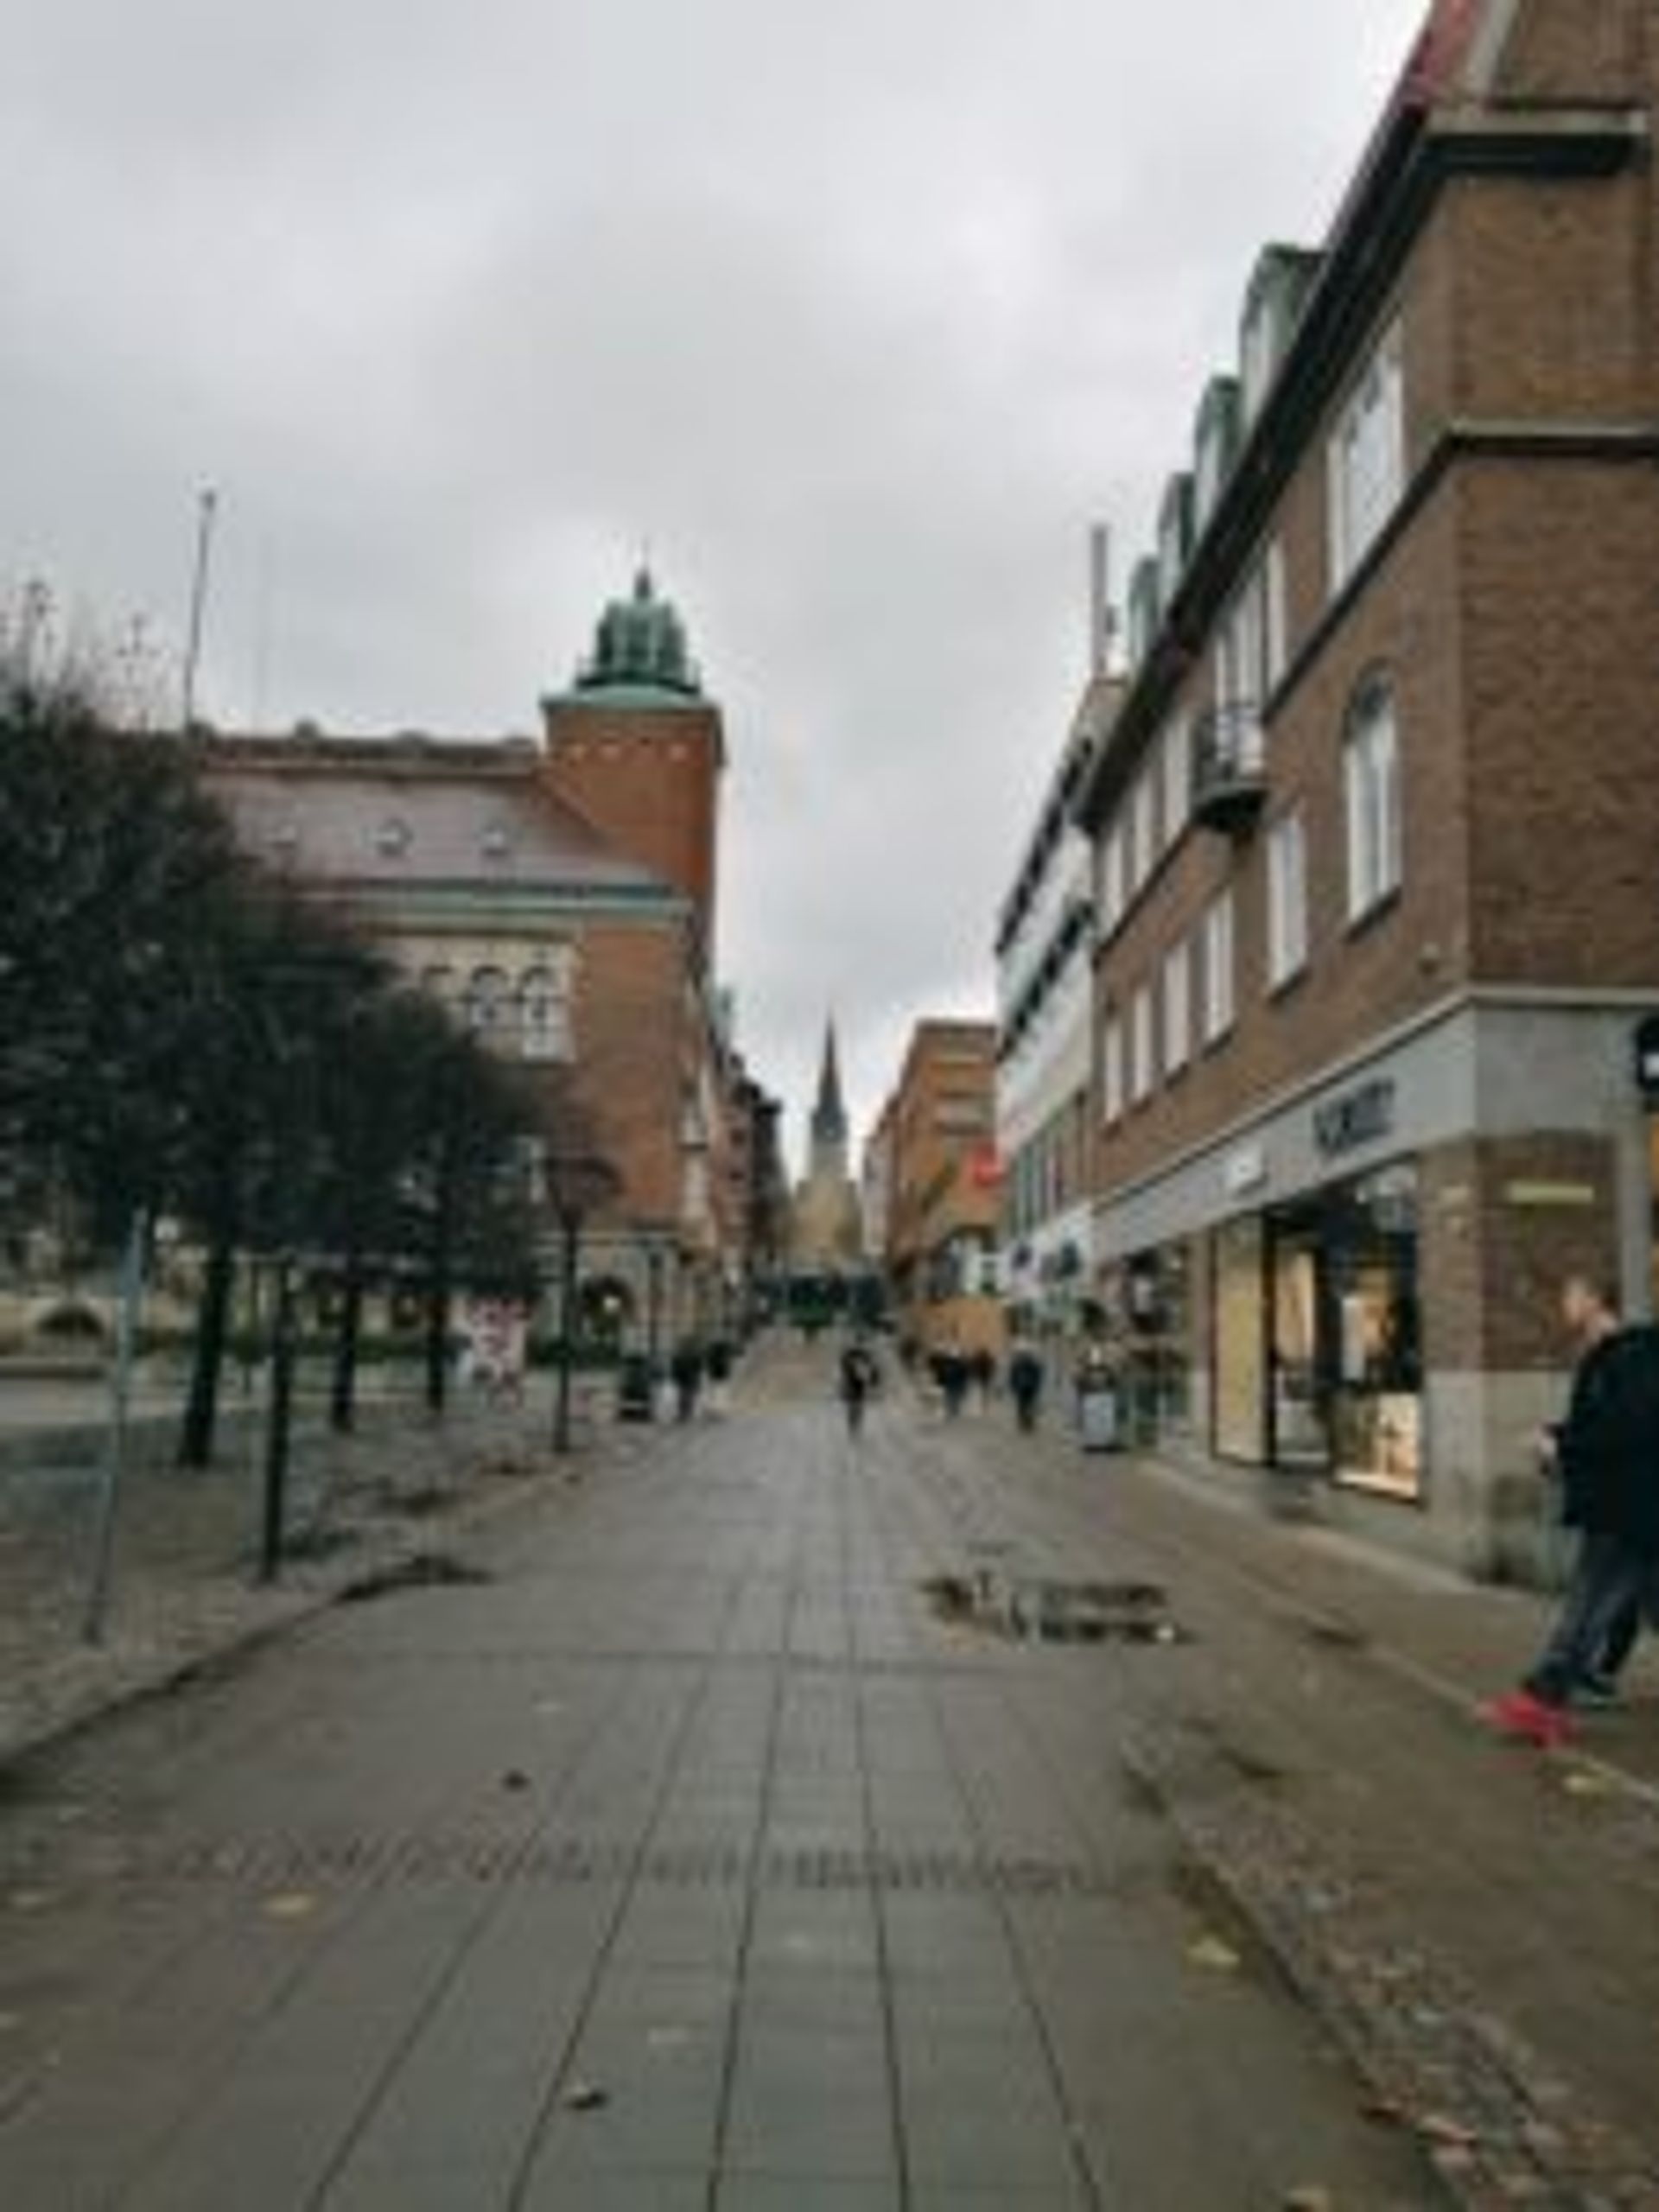 Borås city centre in winter.